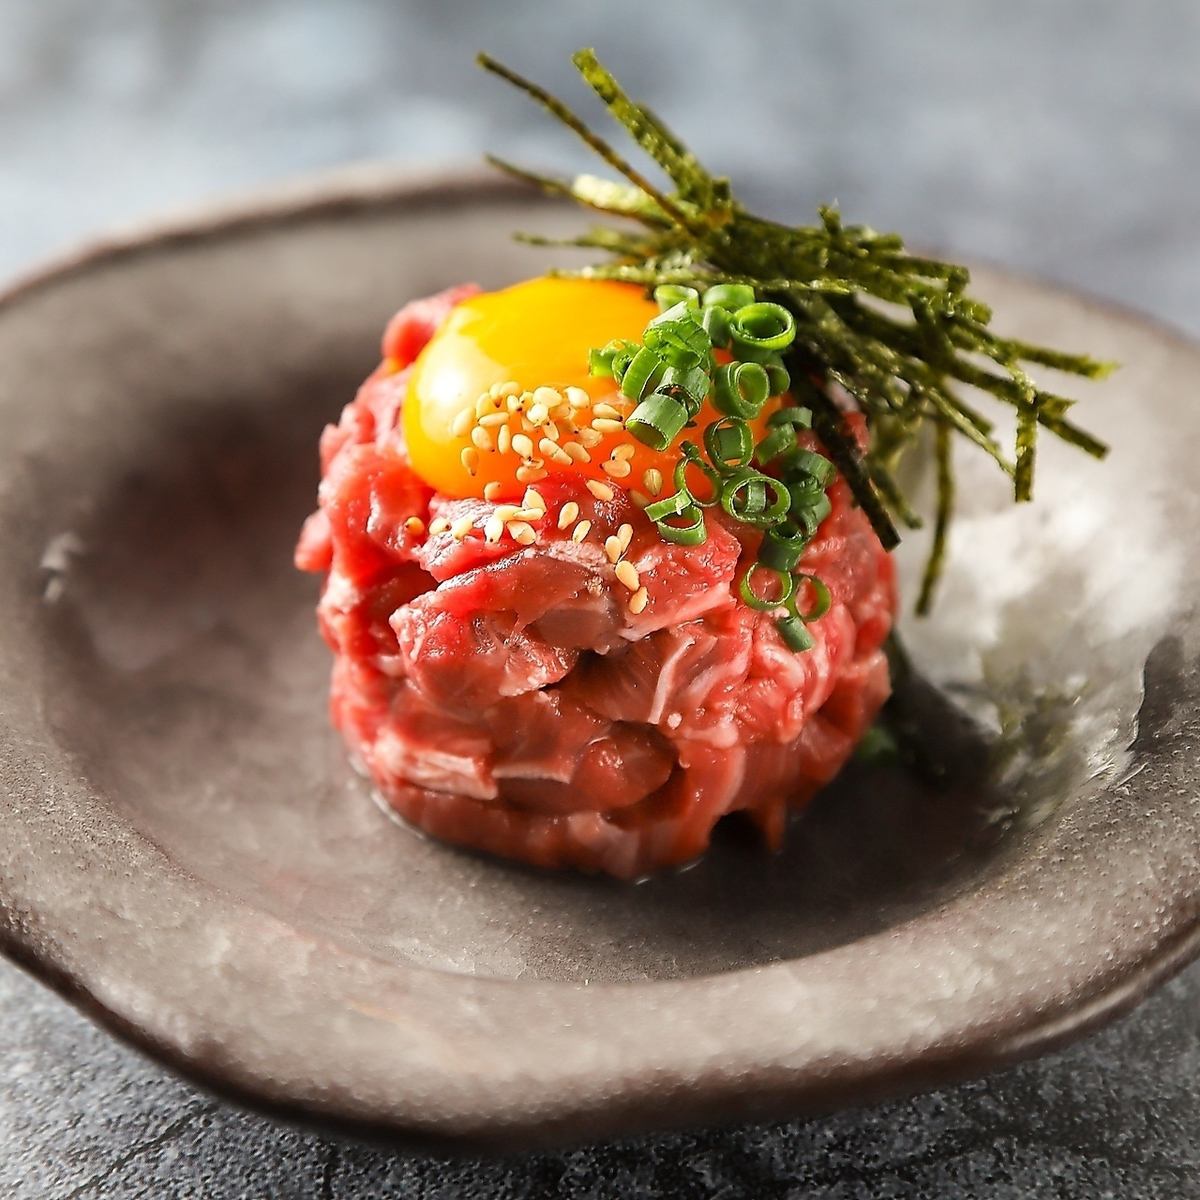 A new luxury yakiniku restaurant where you can enjoy the highest rank of Japanese beef